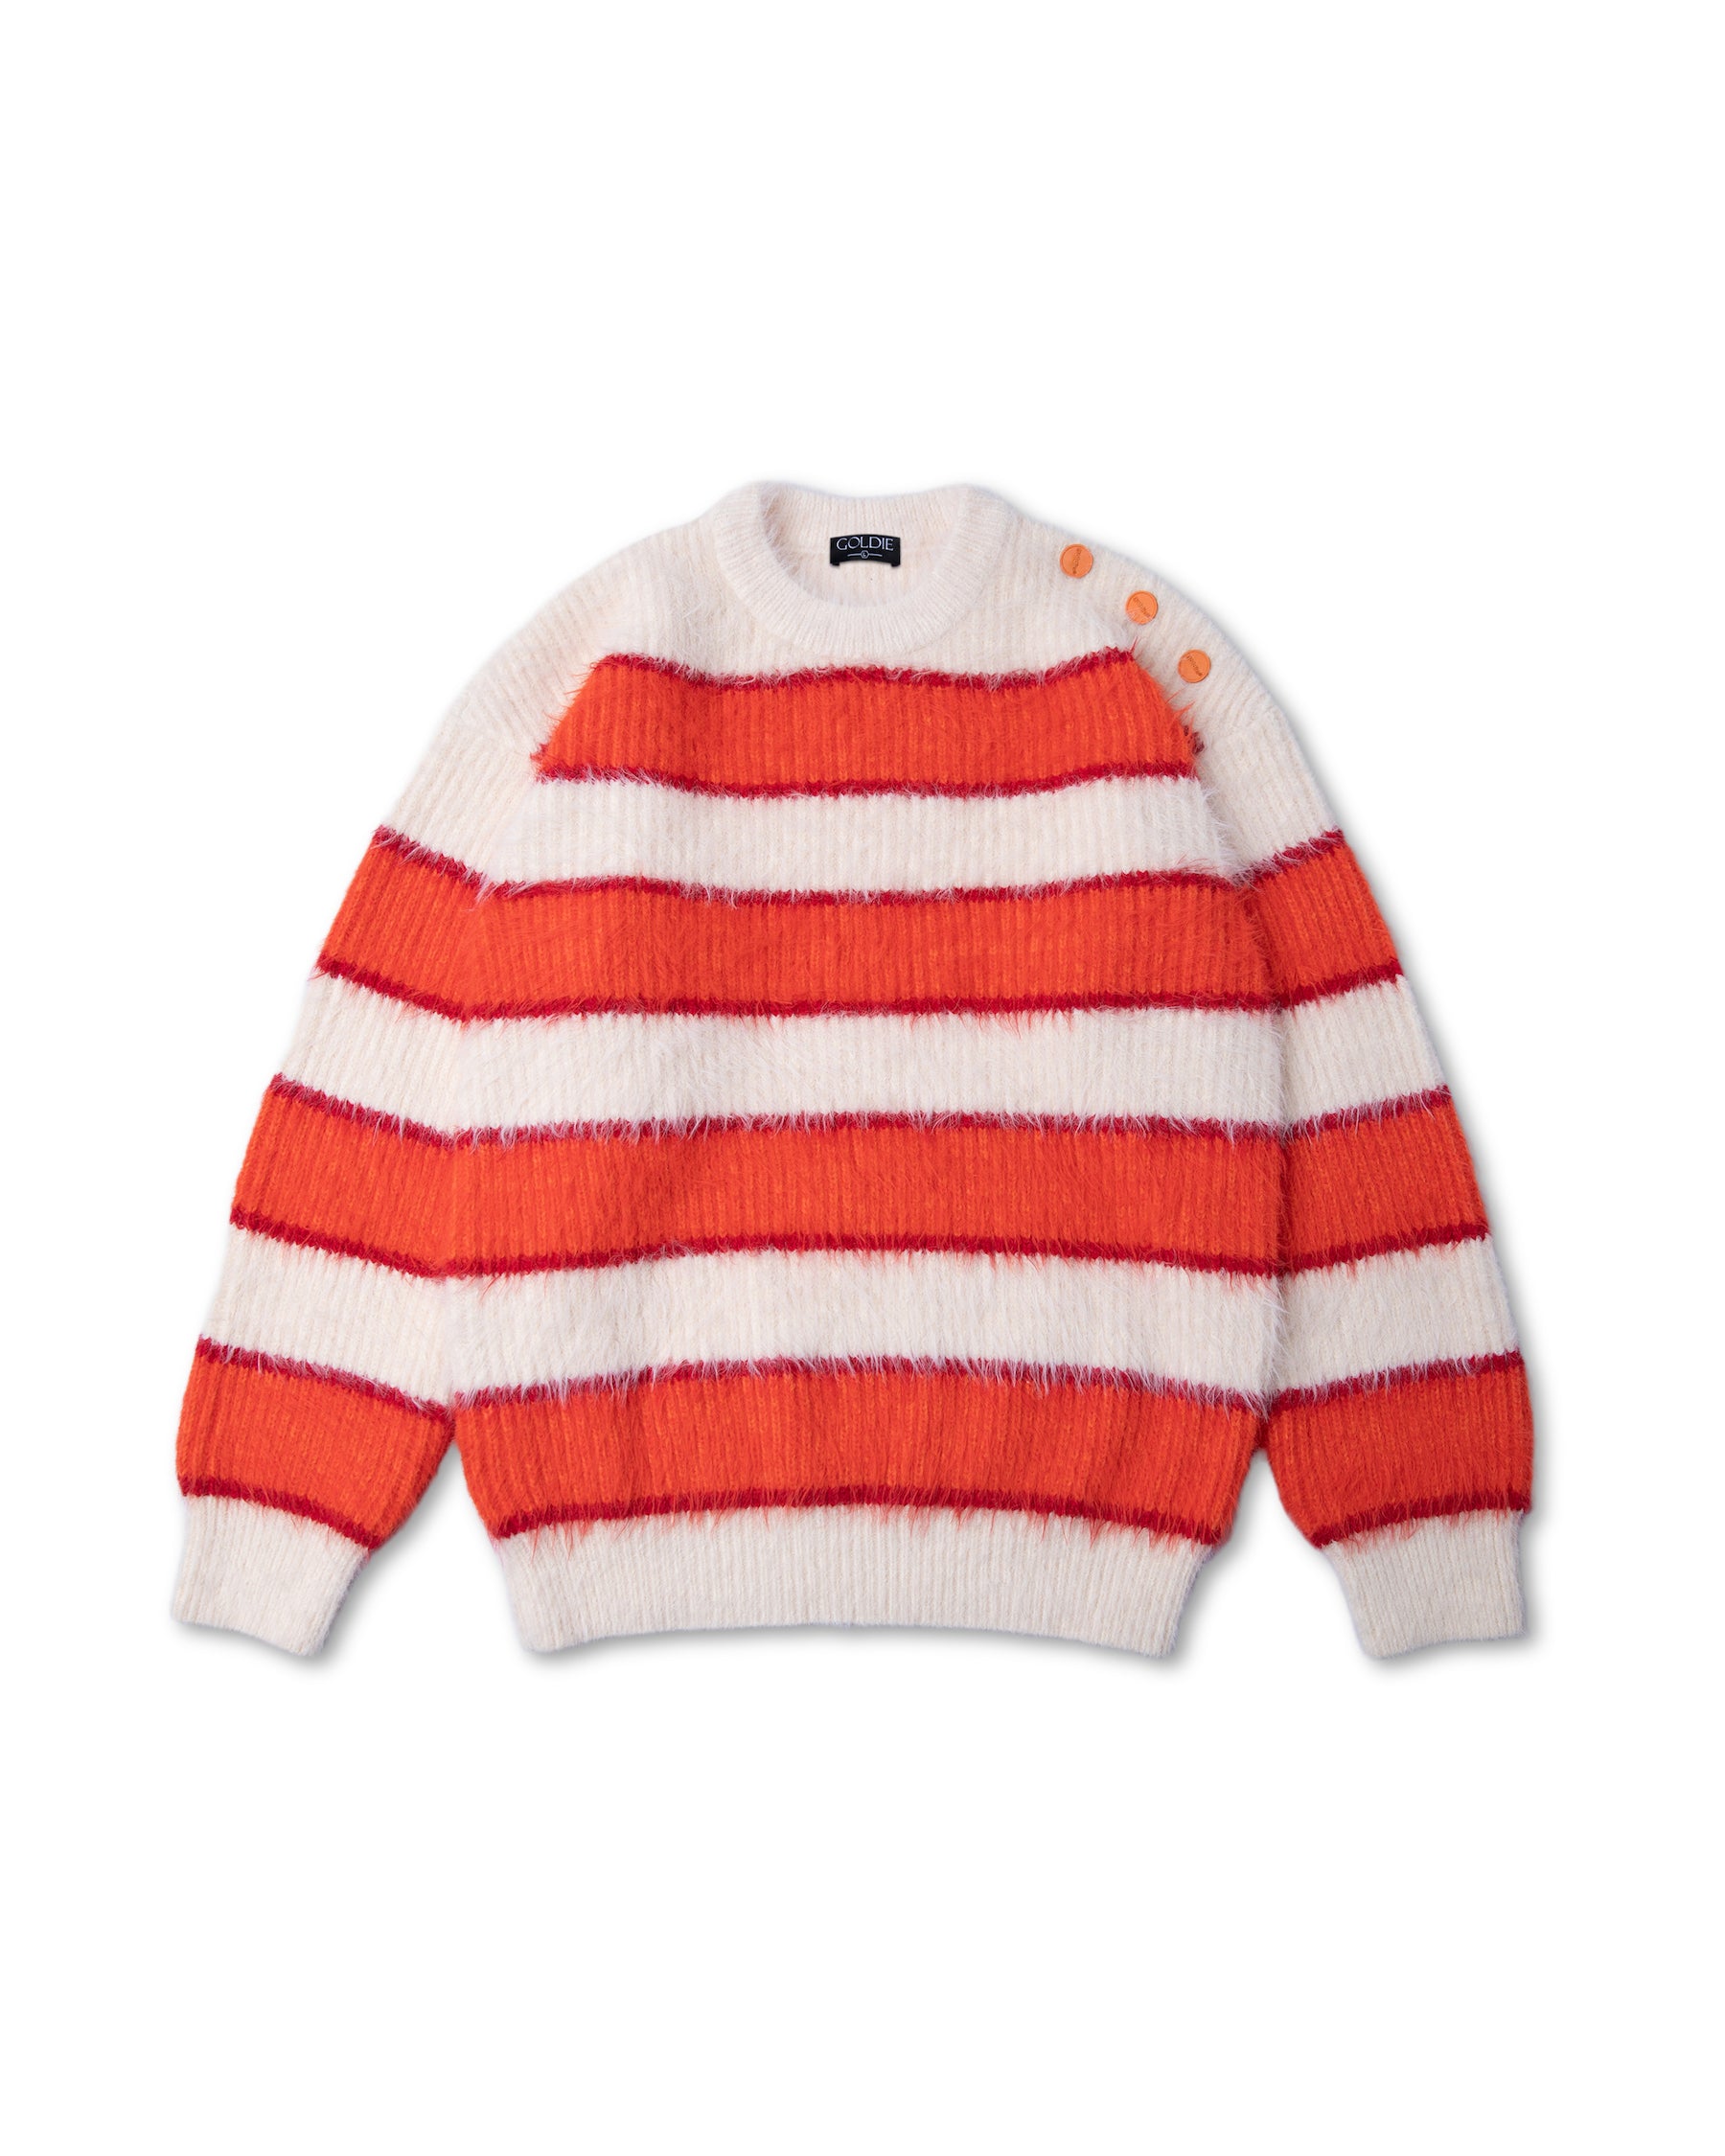 orange-striped-mohair-knit-sweater-goldie-astoudorange-striped-mohair-knit-sweater-goldie-astoud